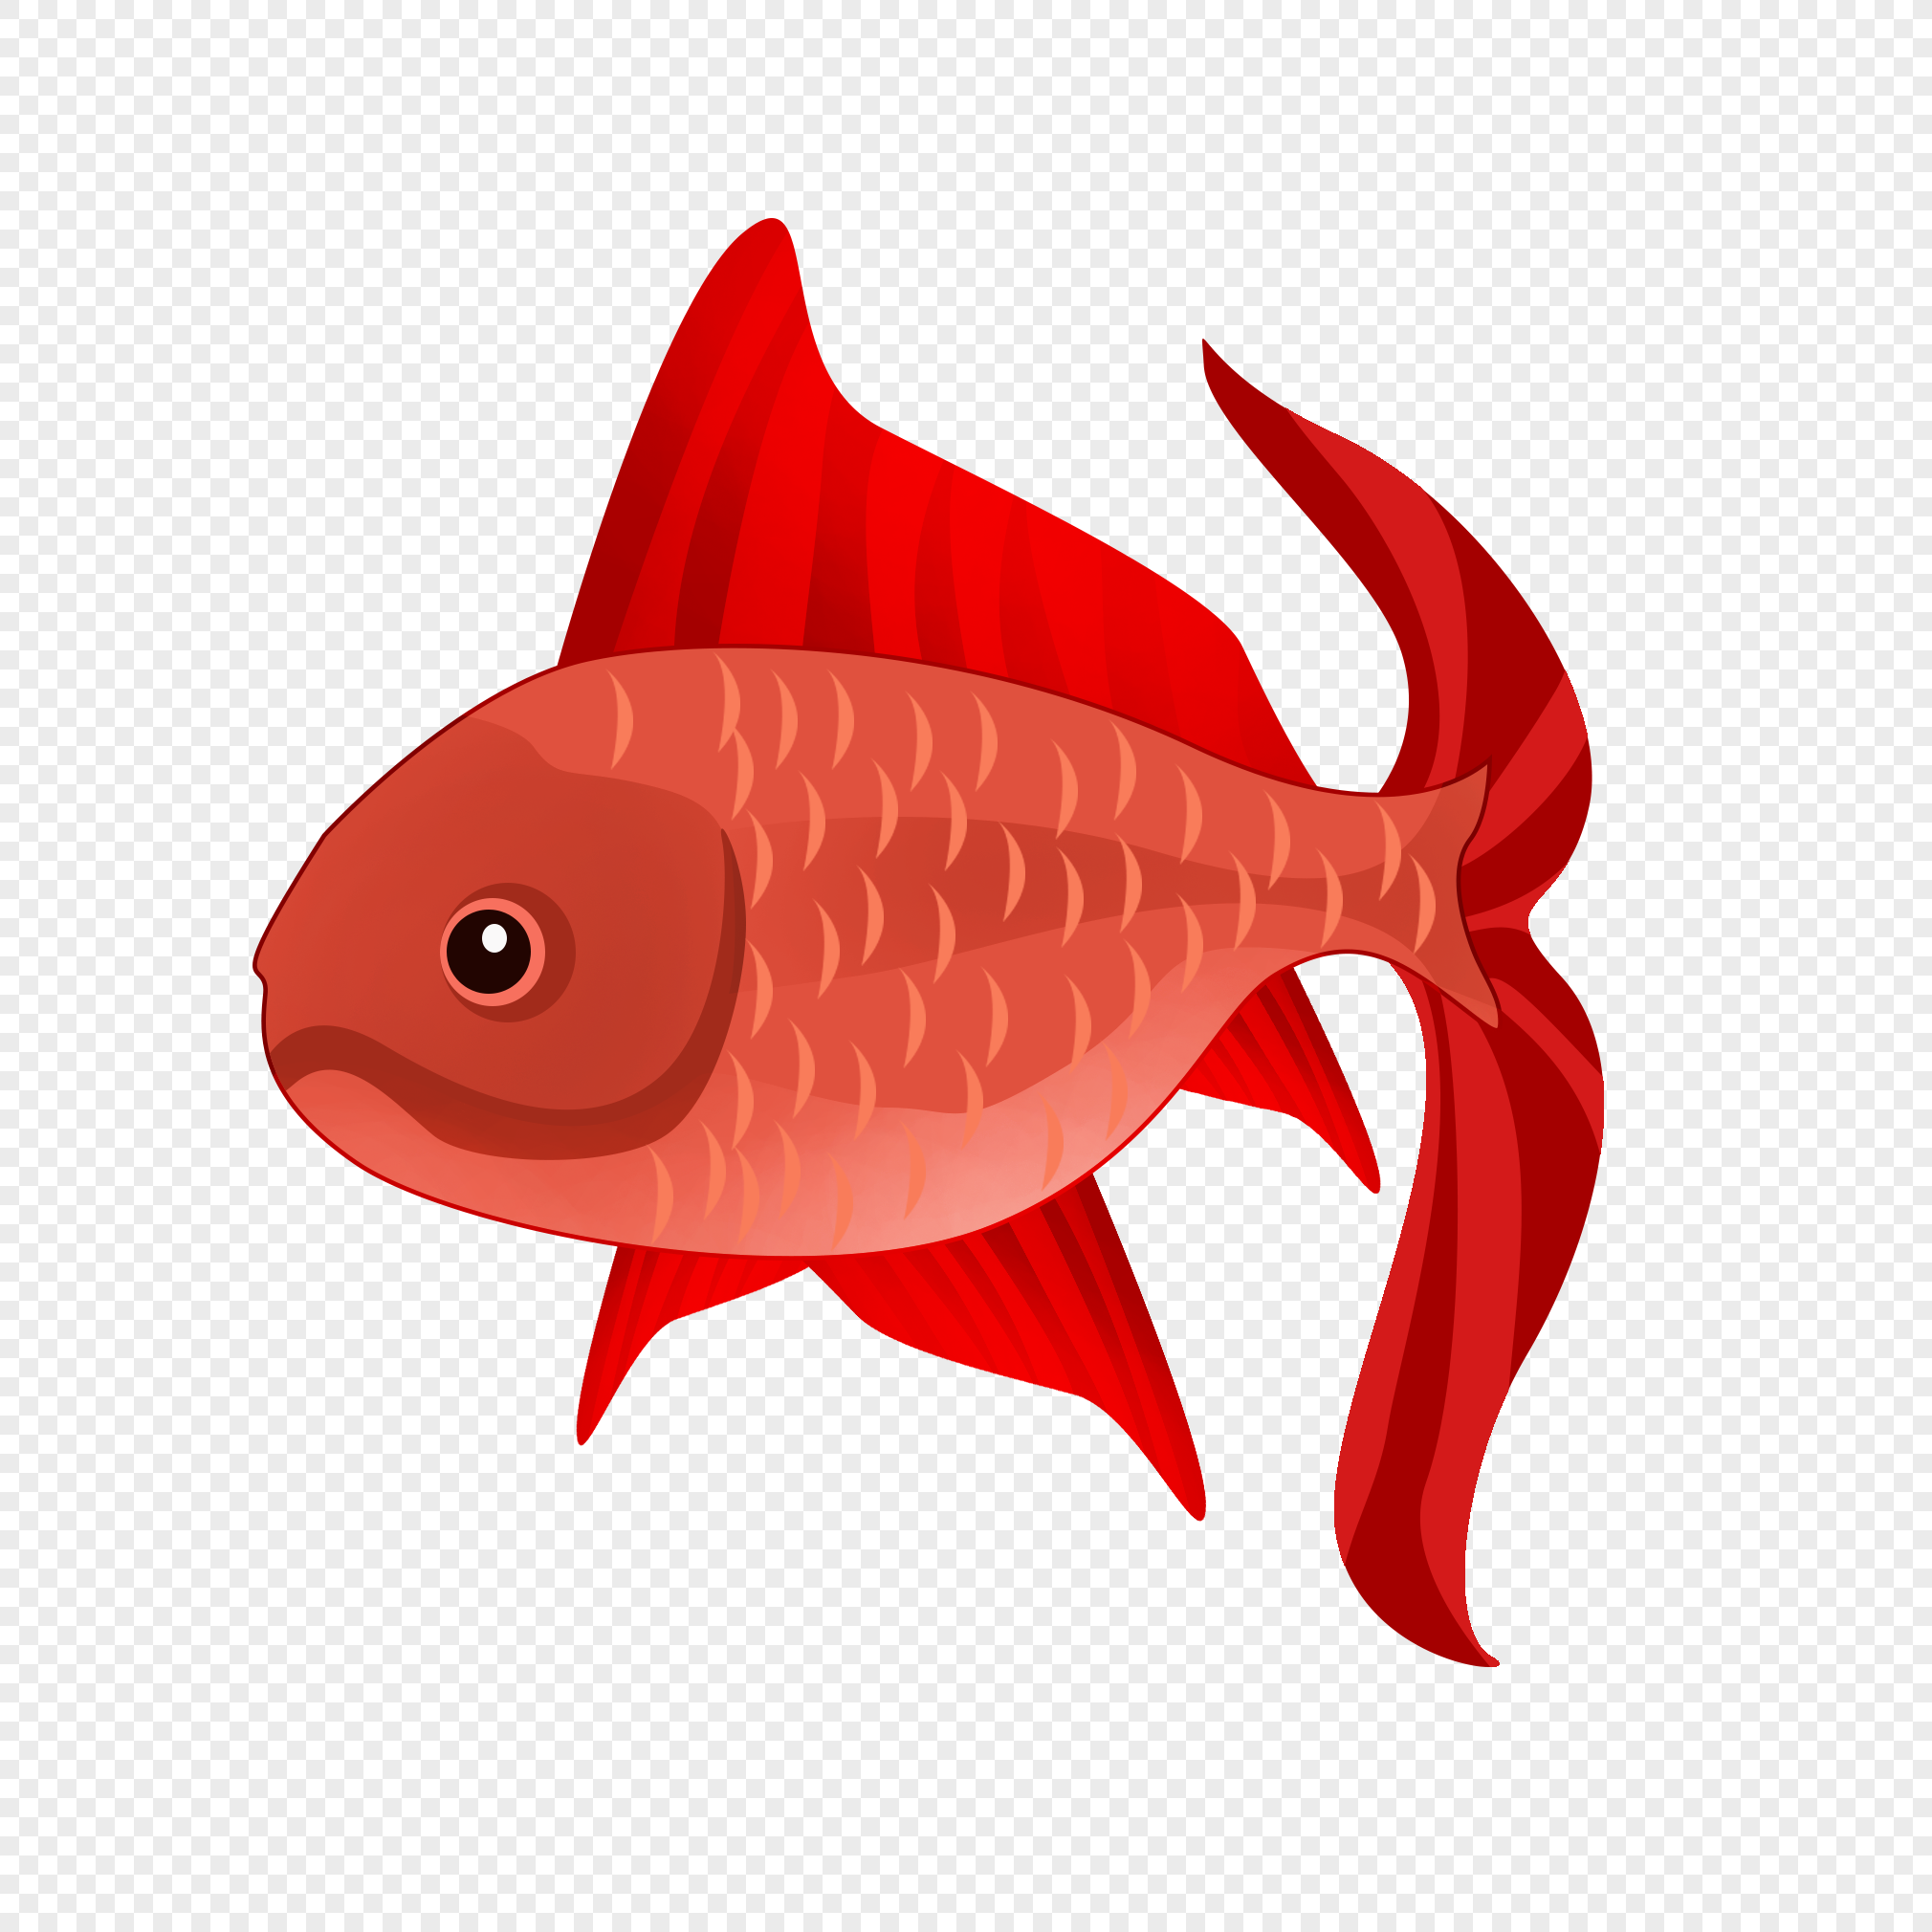 Red Cartoon Fish, Fish, Red Cartoon, Marine Life PNG Free Download